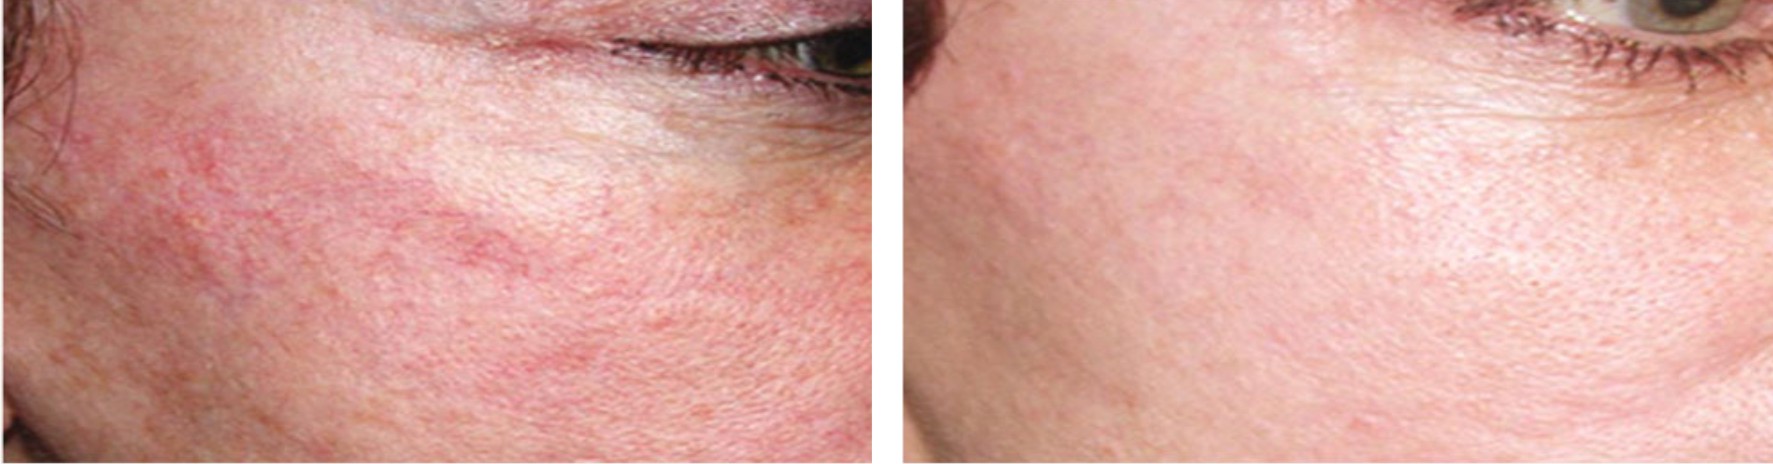 Laser Skin Rejuvenation Image Three